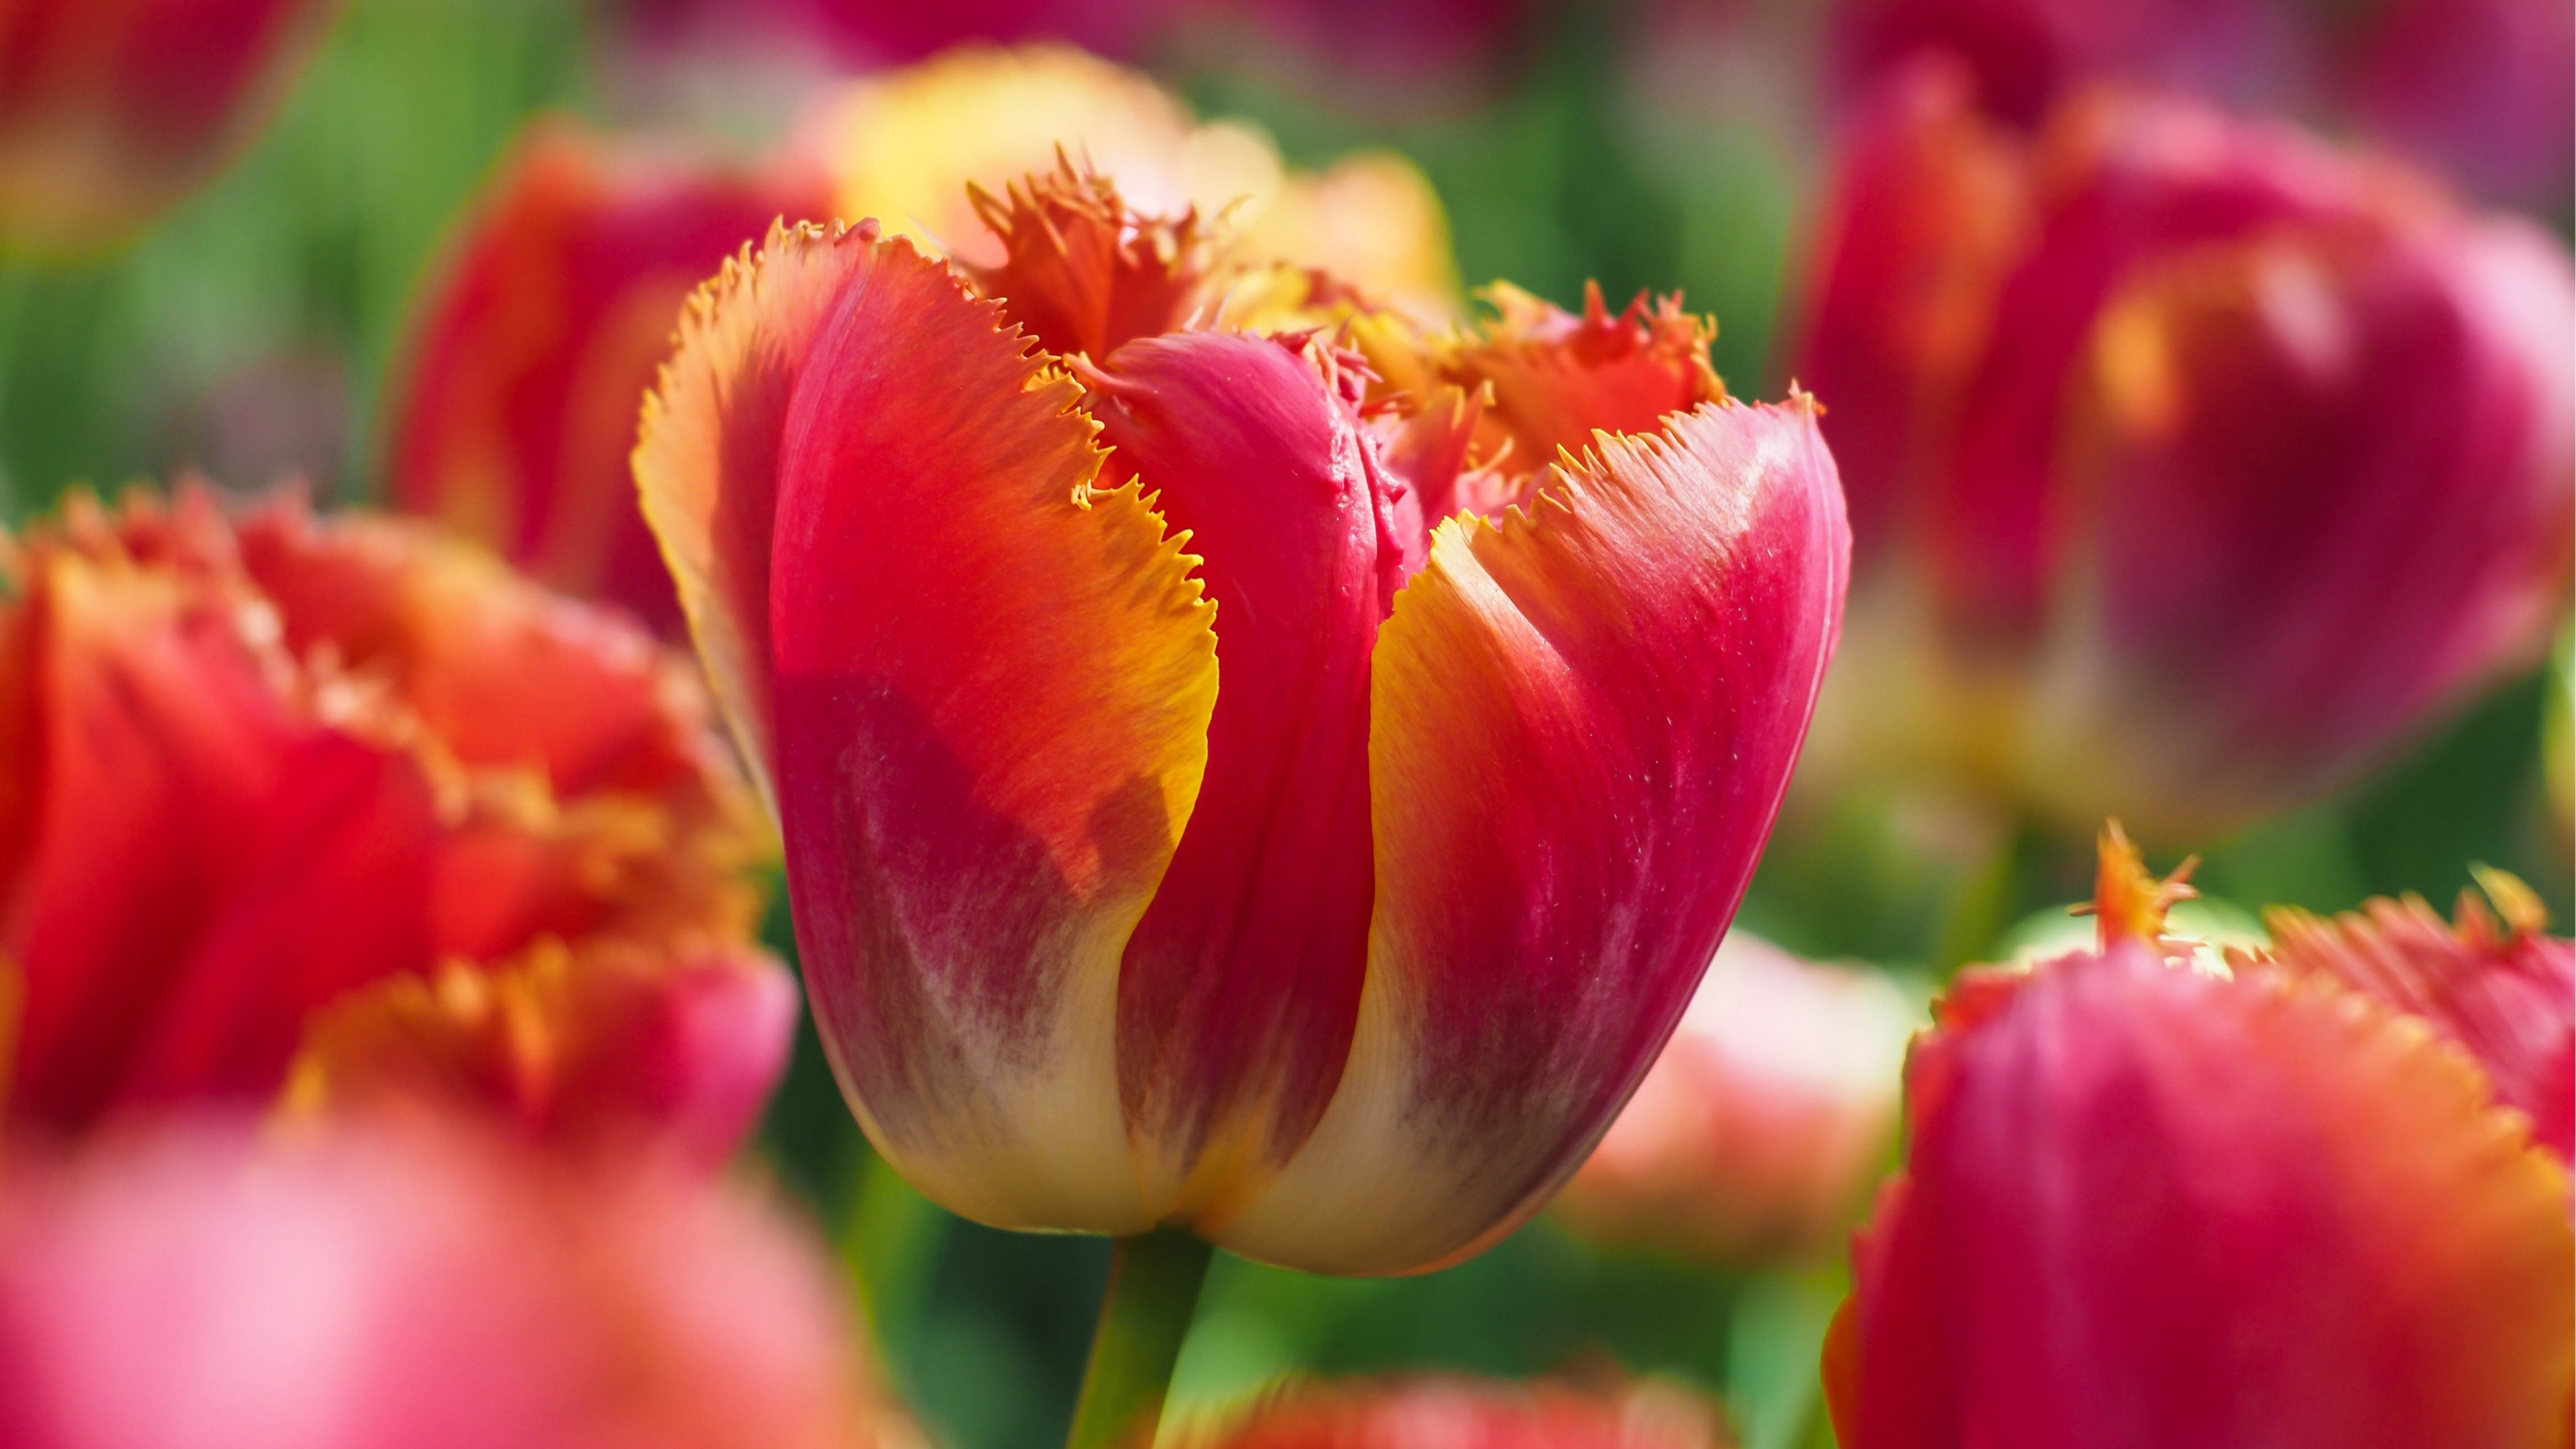 Tulip Flowers 5K Wallpaper in jpg format for free download